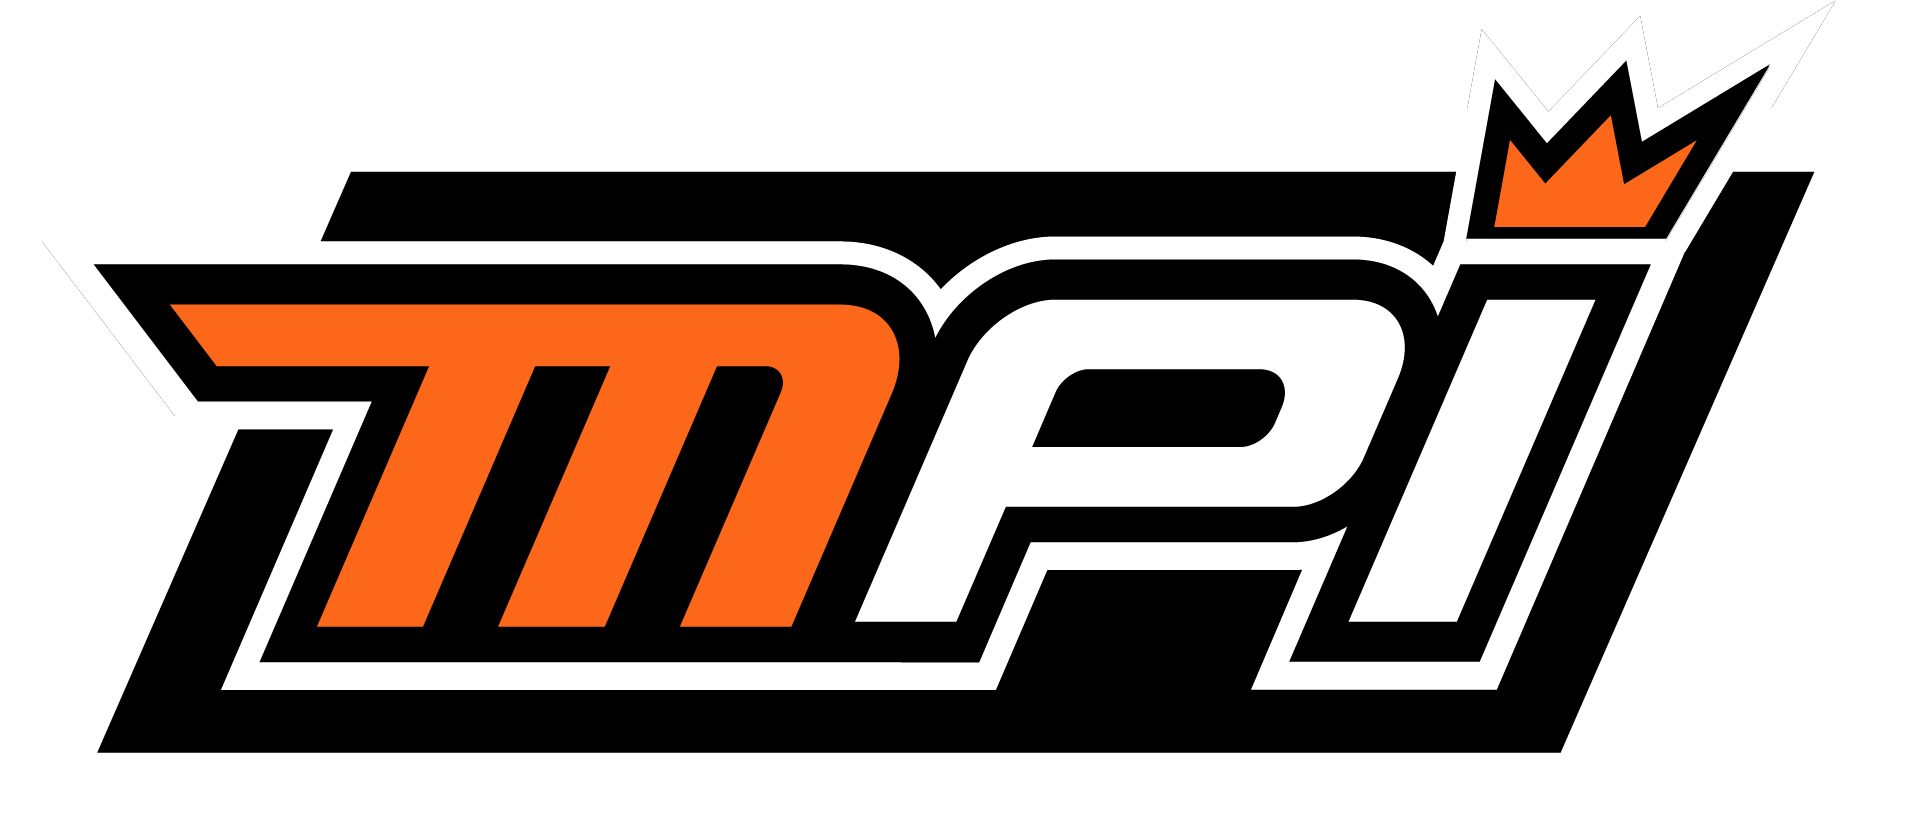 MPI Logo - Products - 3/5 - Max Papis Innovations